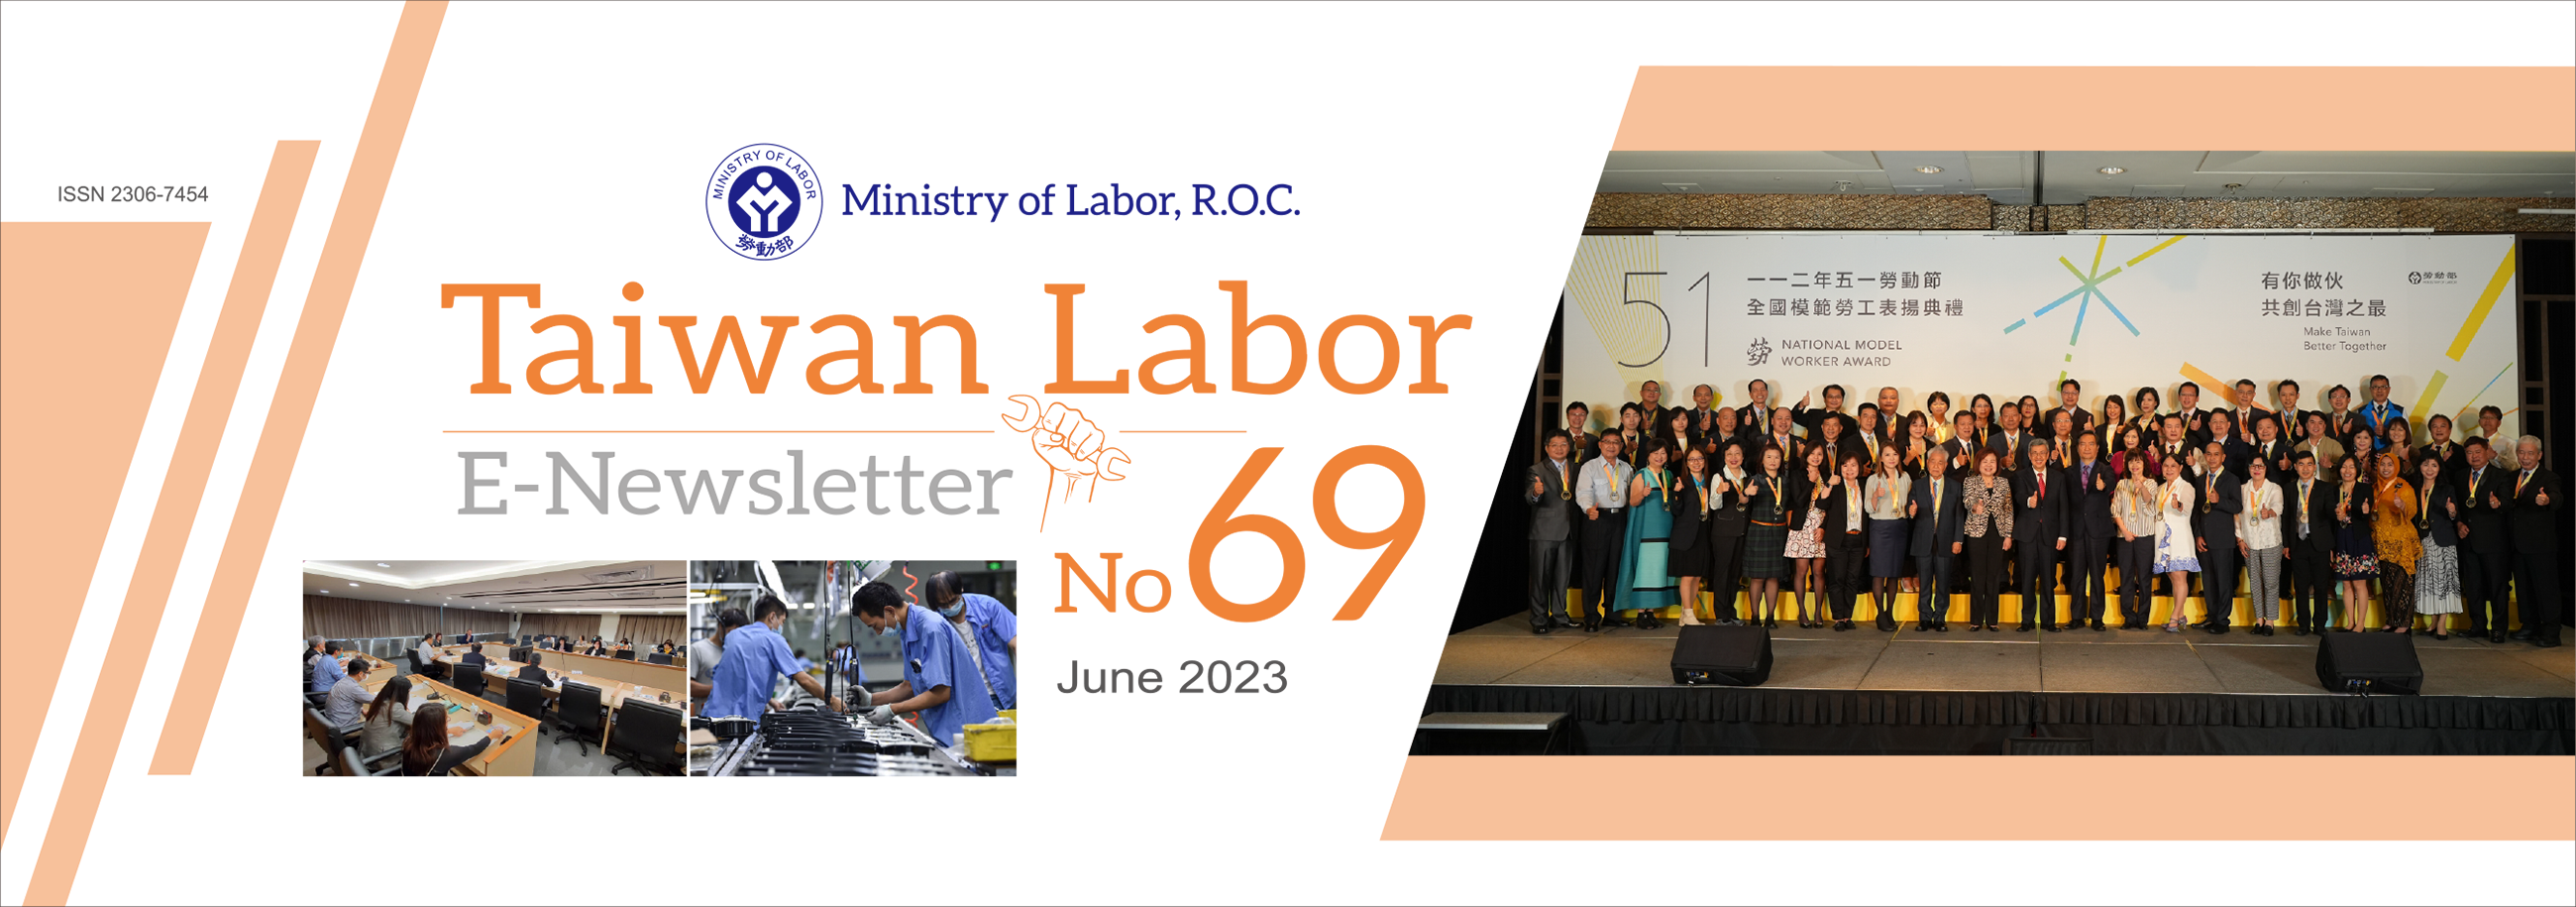 Taiwan Labor E-Newsletter No.69 Banner